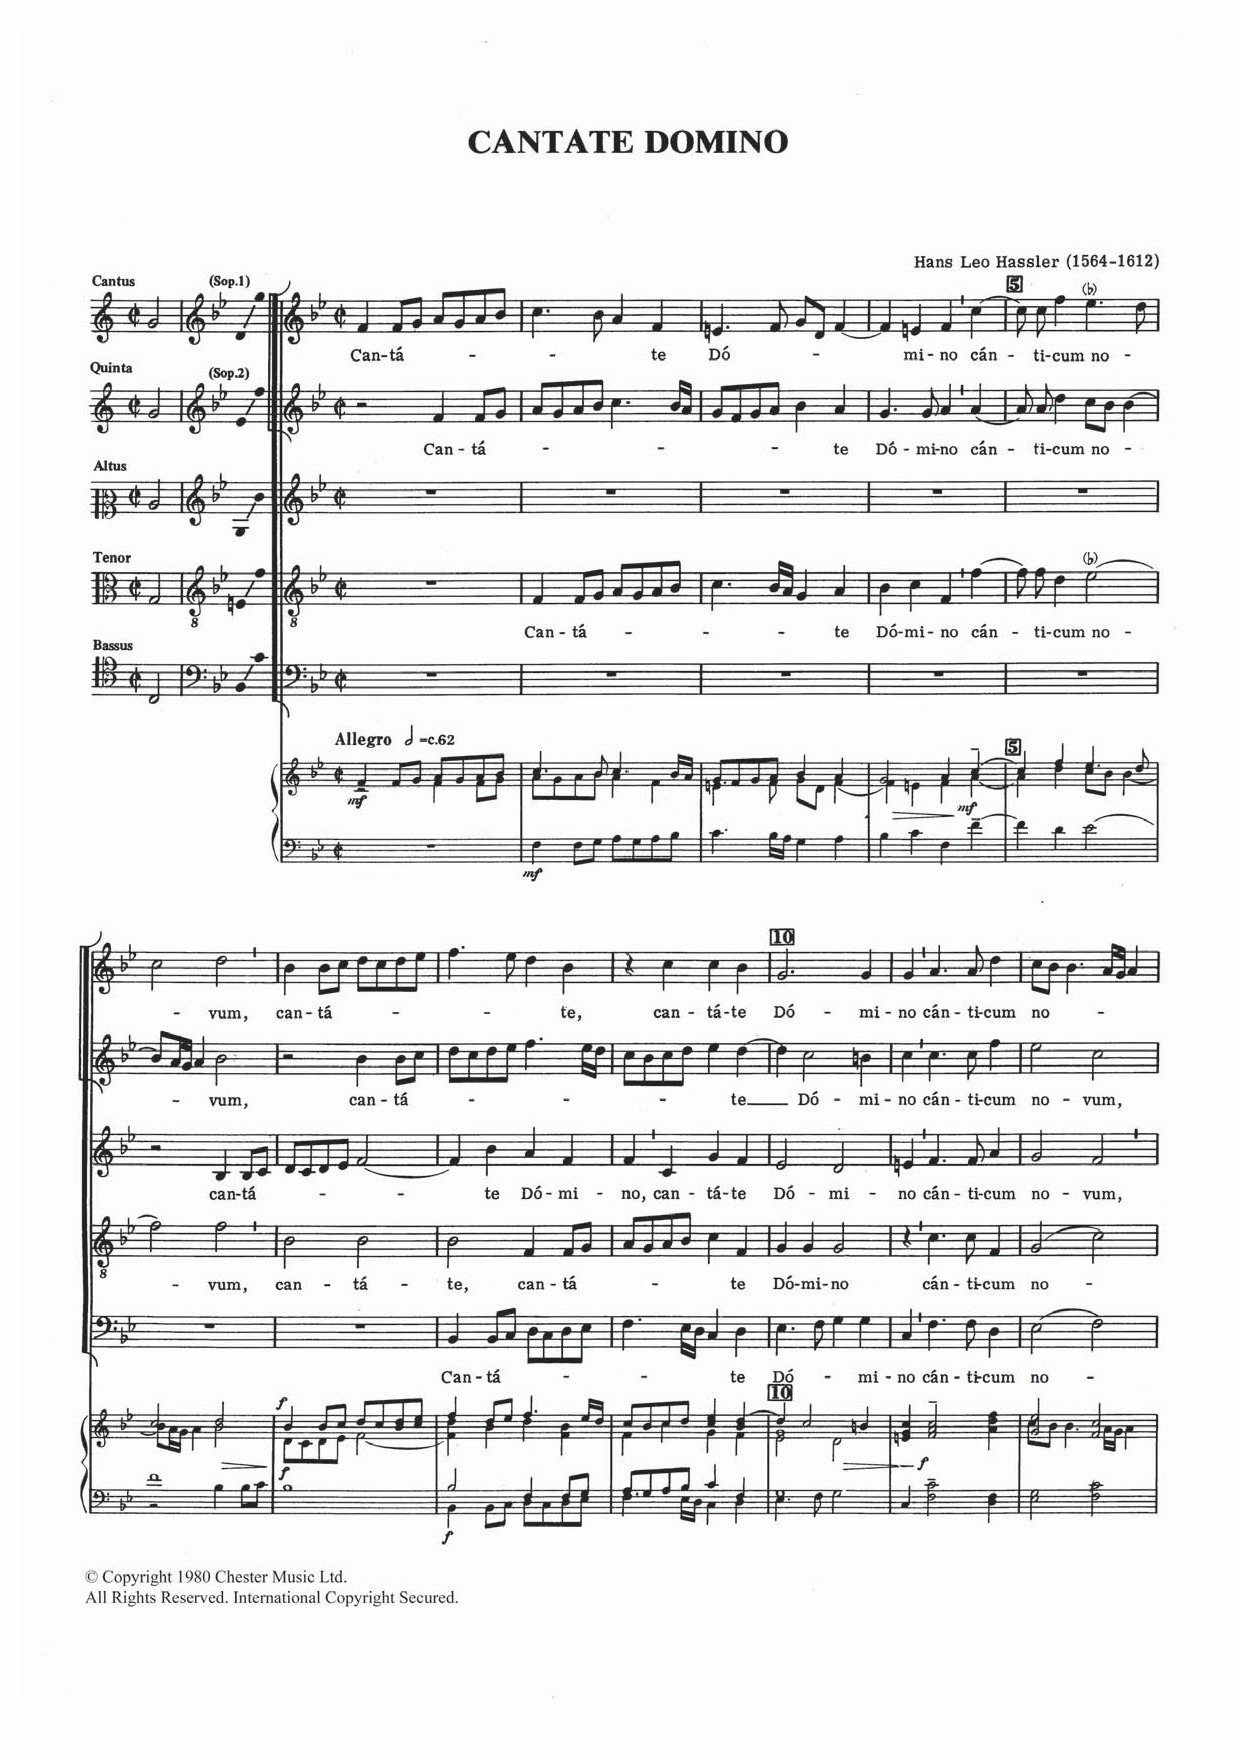 Cantate Domino (Piano, Vocal & Guitar Chords) von Hans Leo Hassler